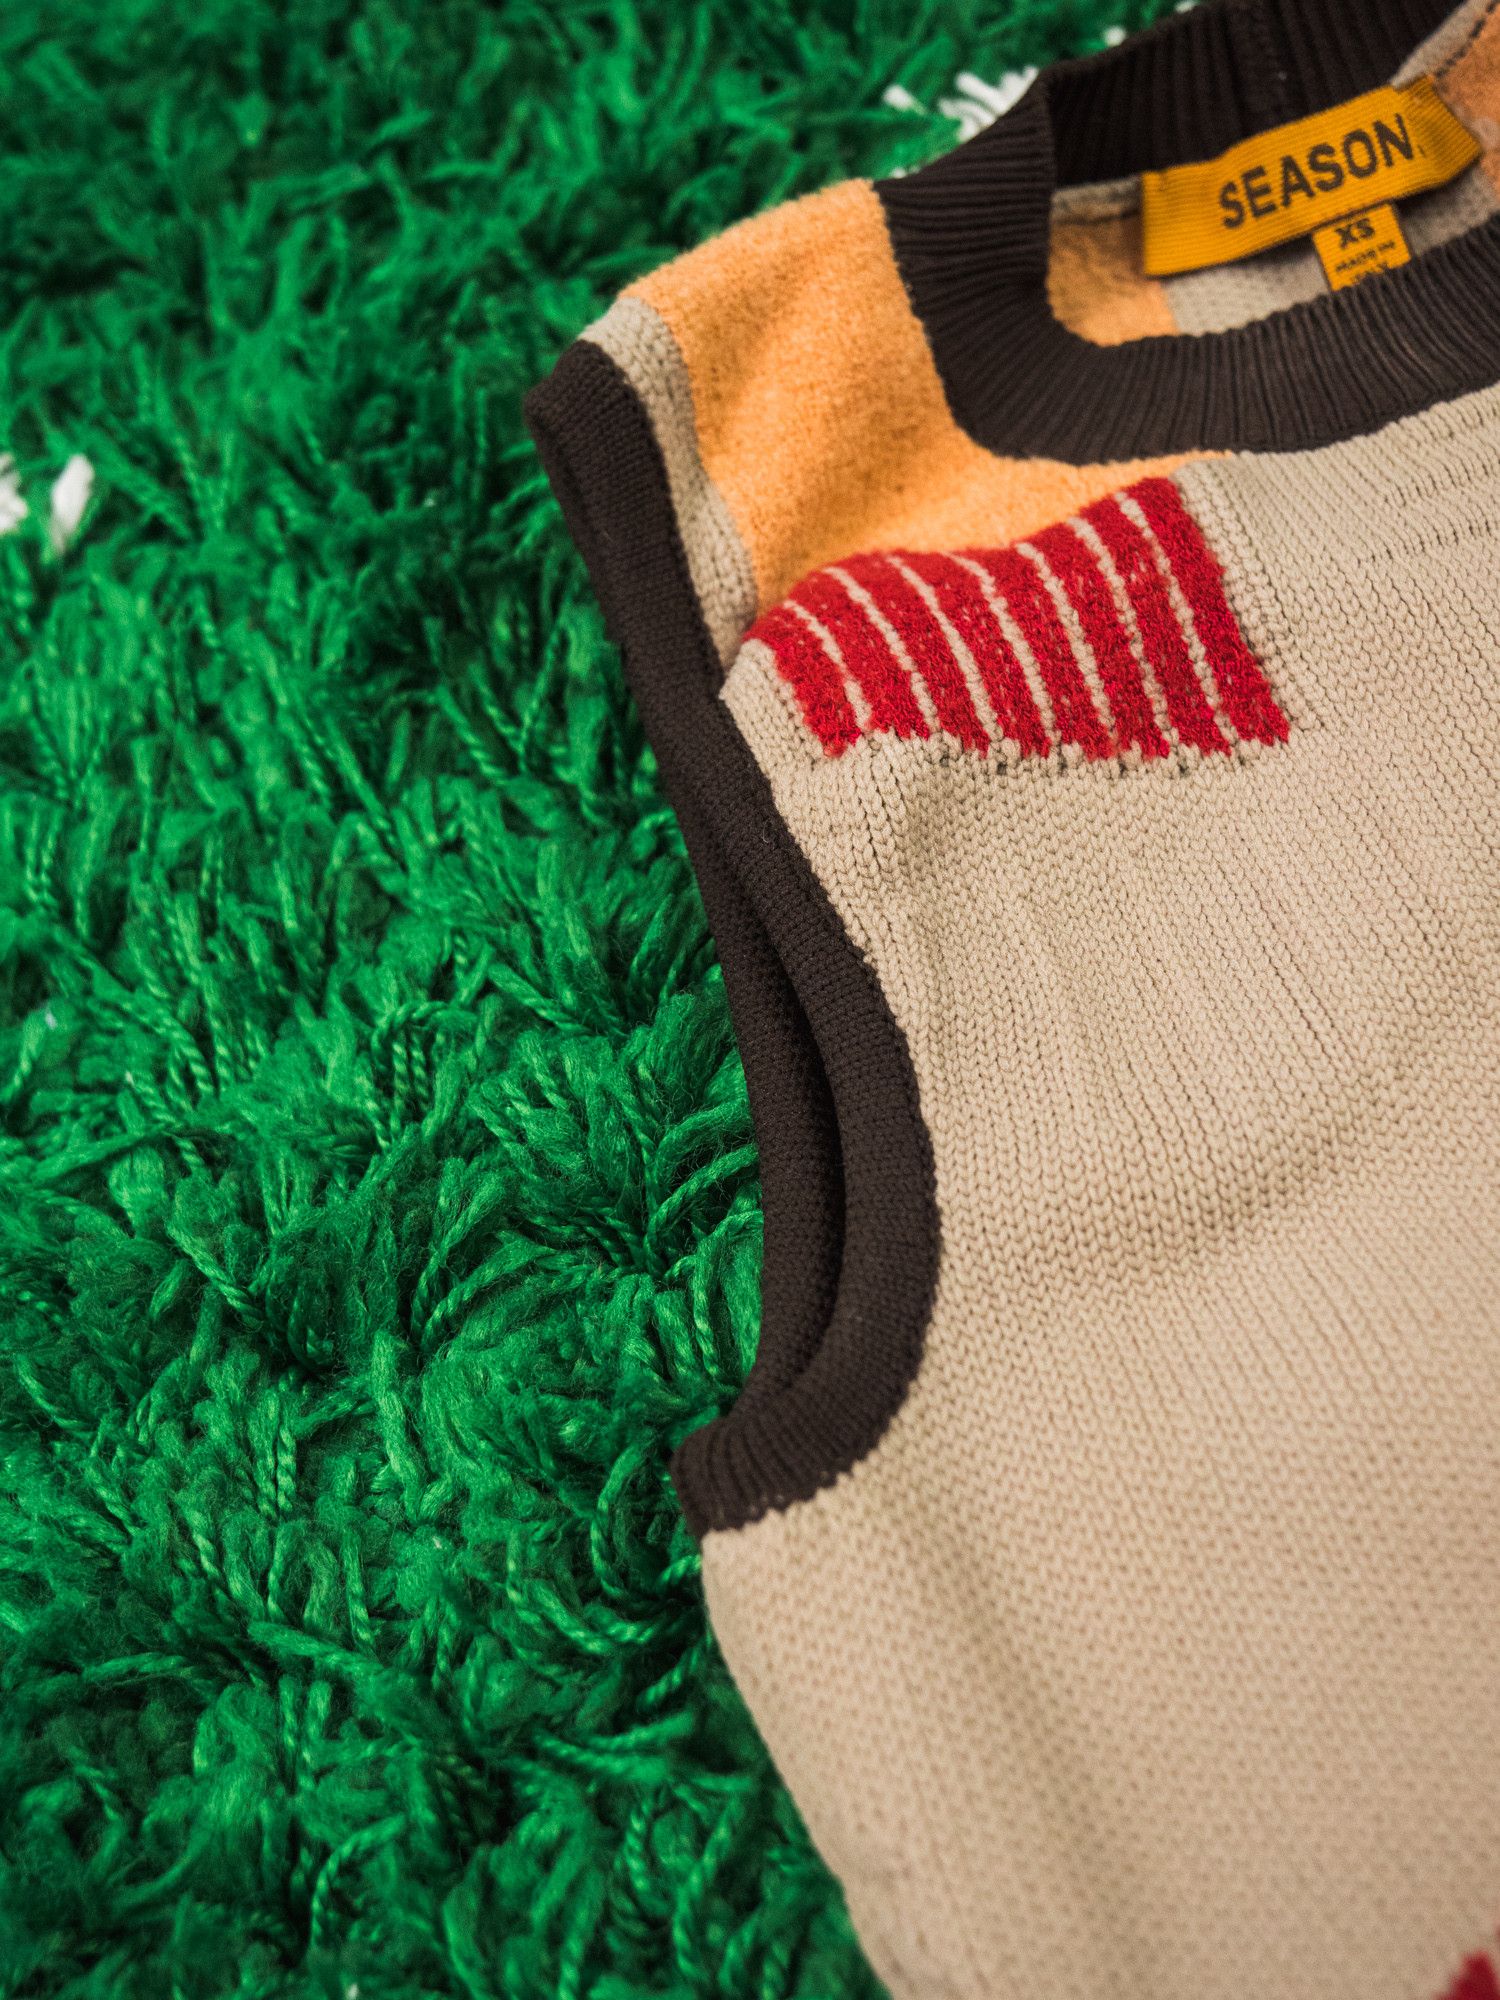 Yeezy Season YEEZY Season 3 - Sock Knit Graphic Crop Top Knitted Size XS / US 0-2 / IT 36-38 - 7 Thumbnail